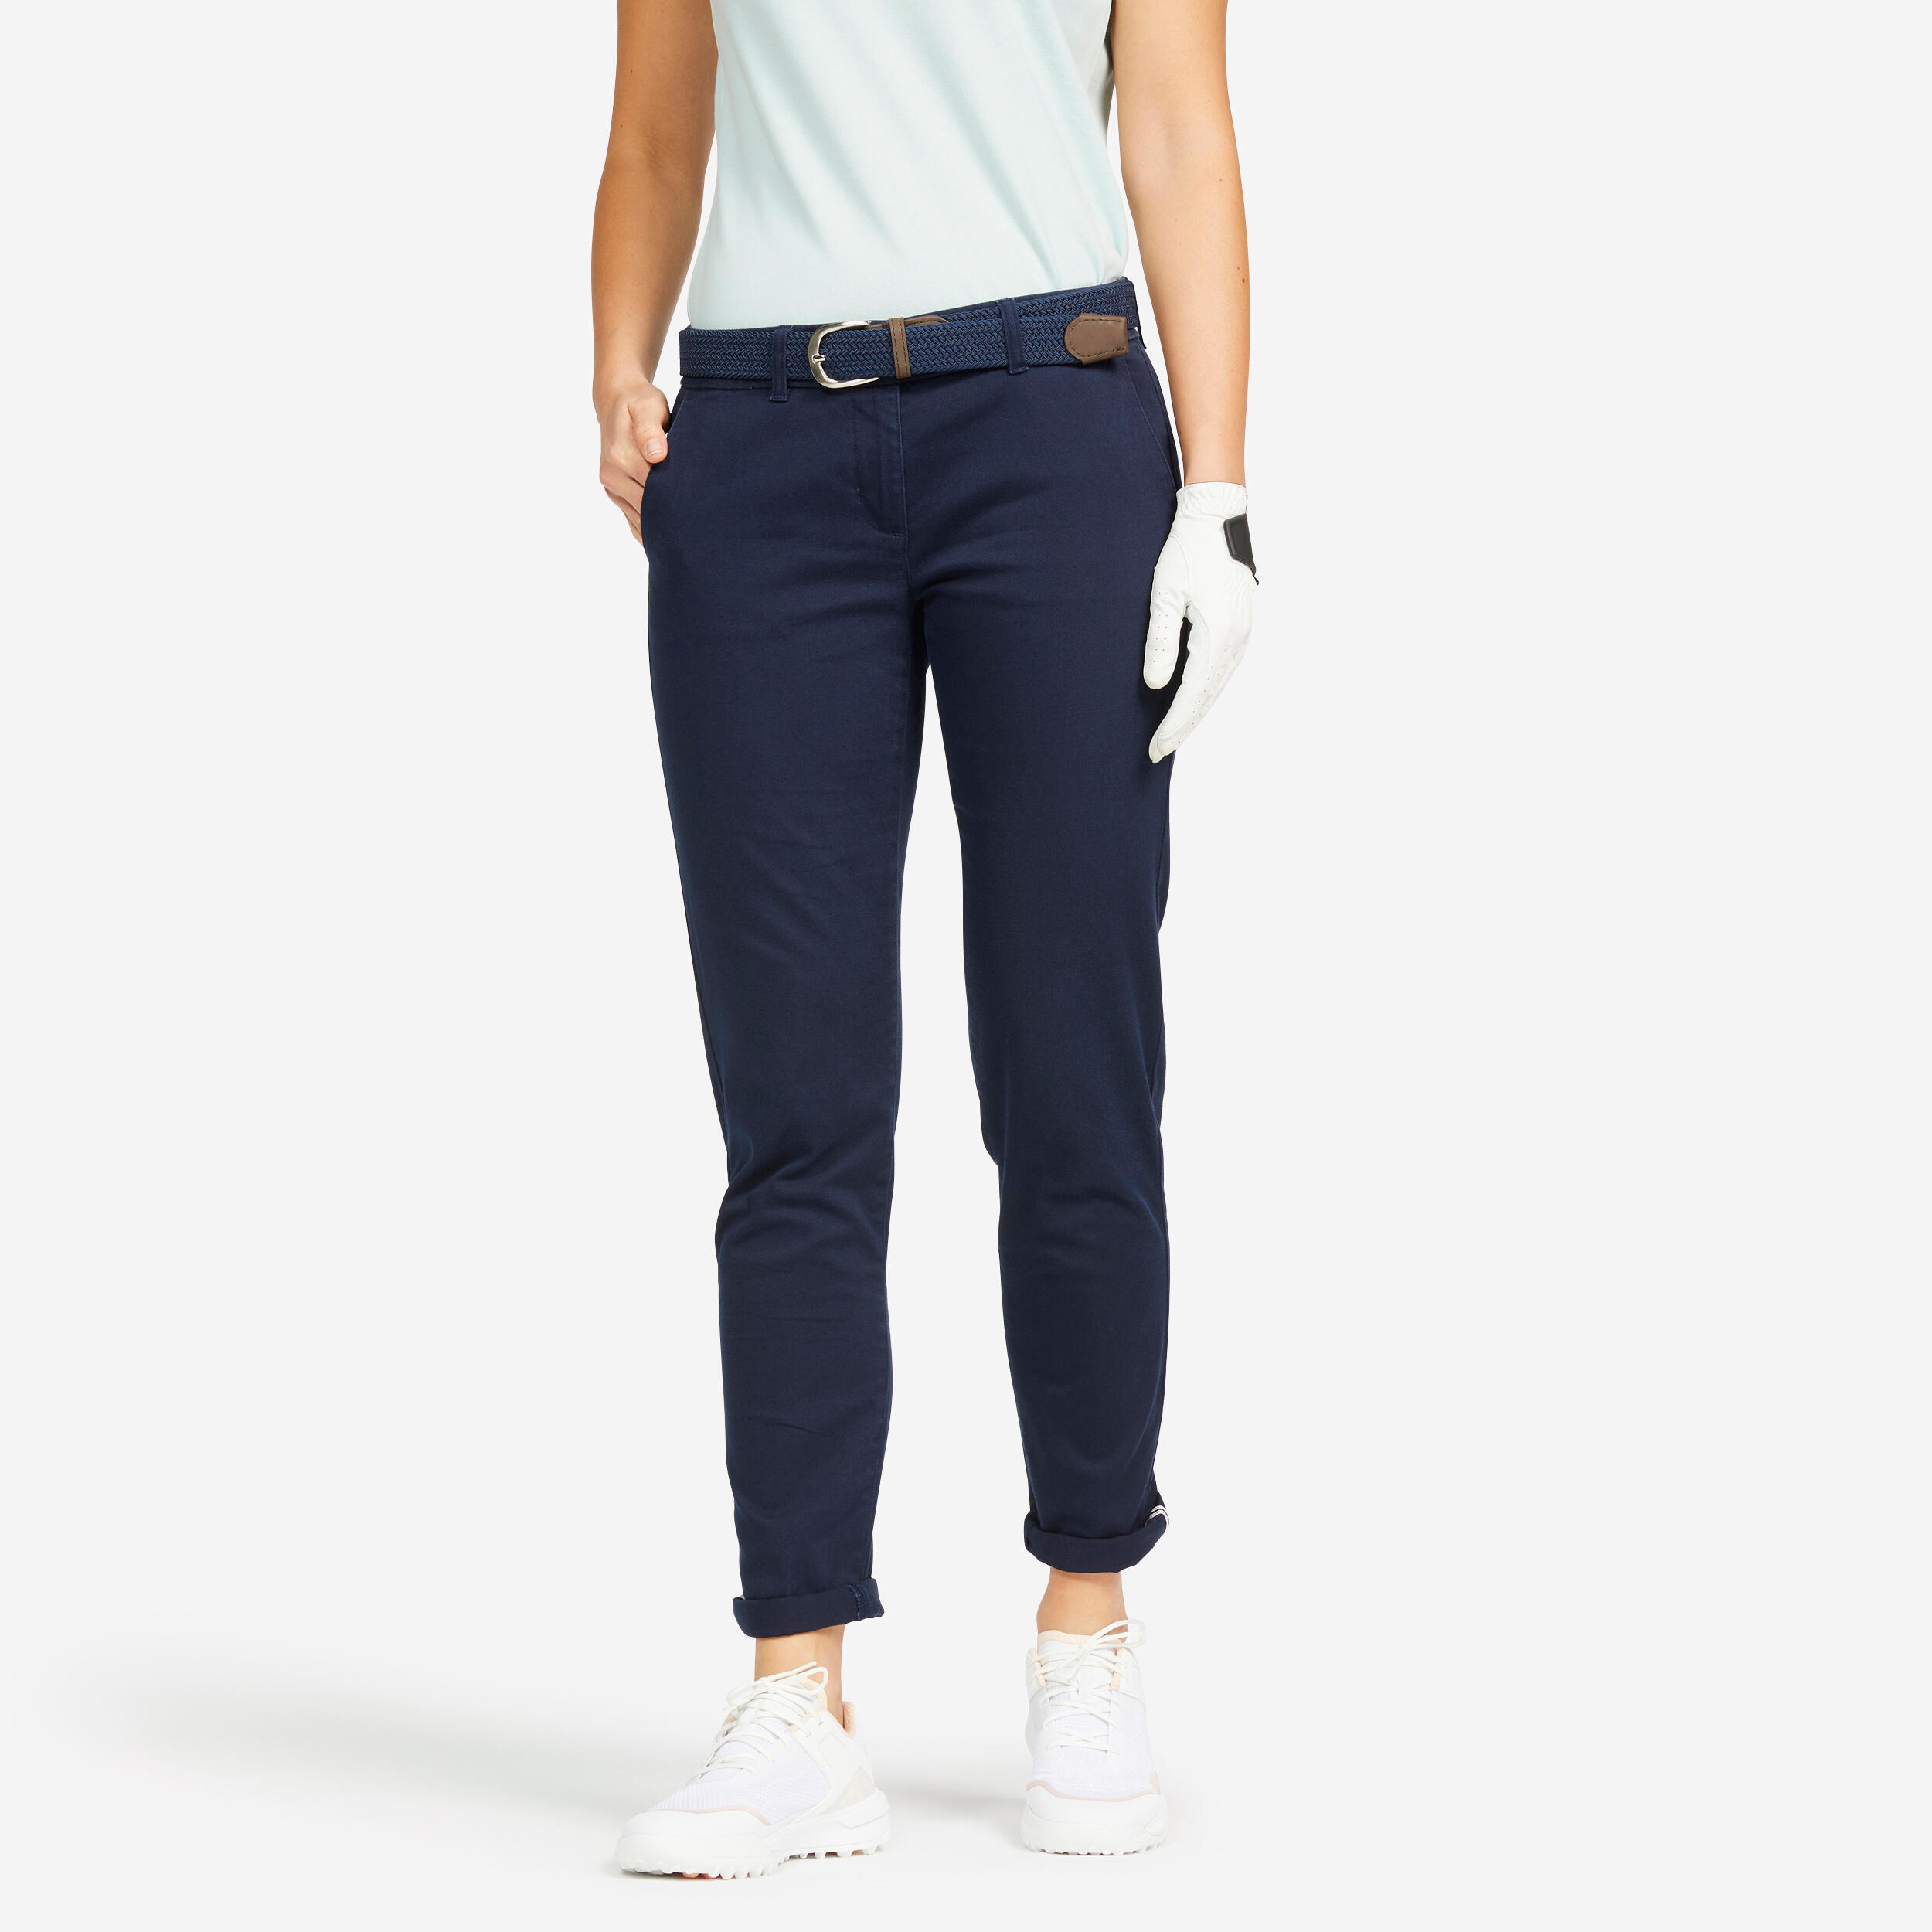 INESIS Women's Golf Trousers - MW500 Navy Blue